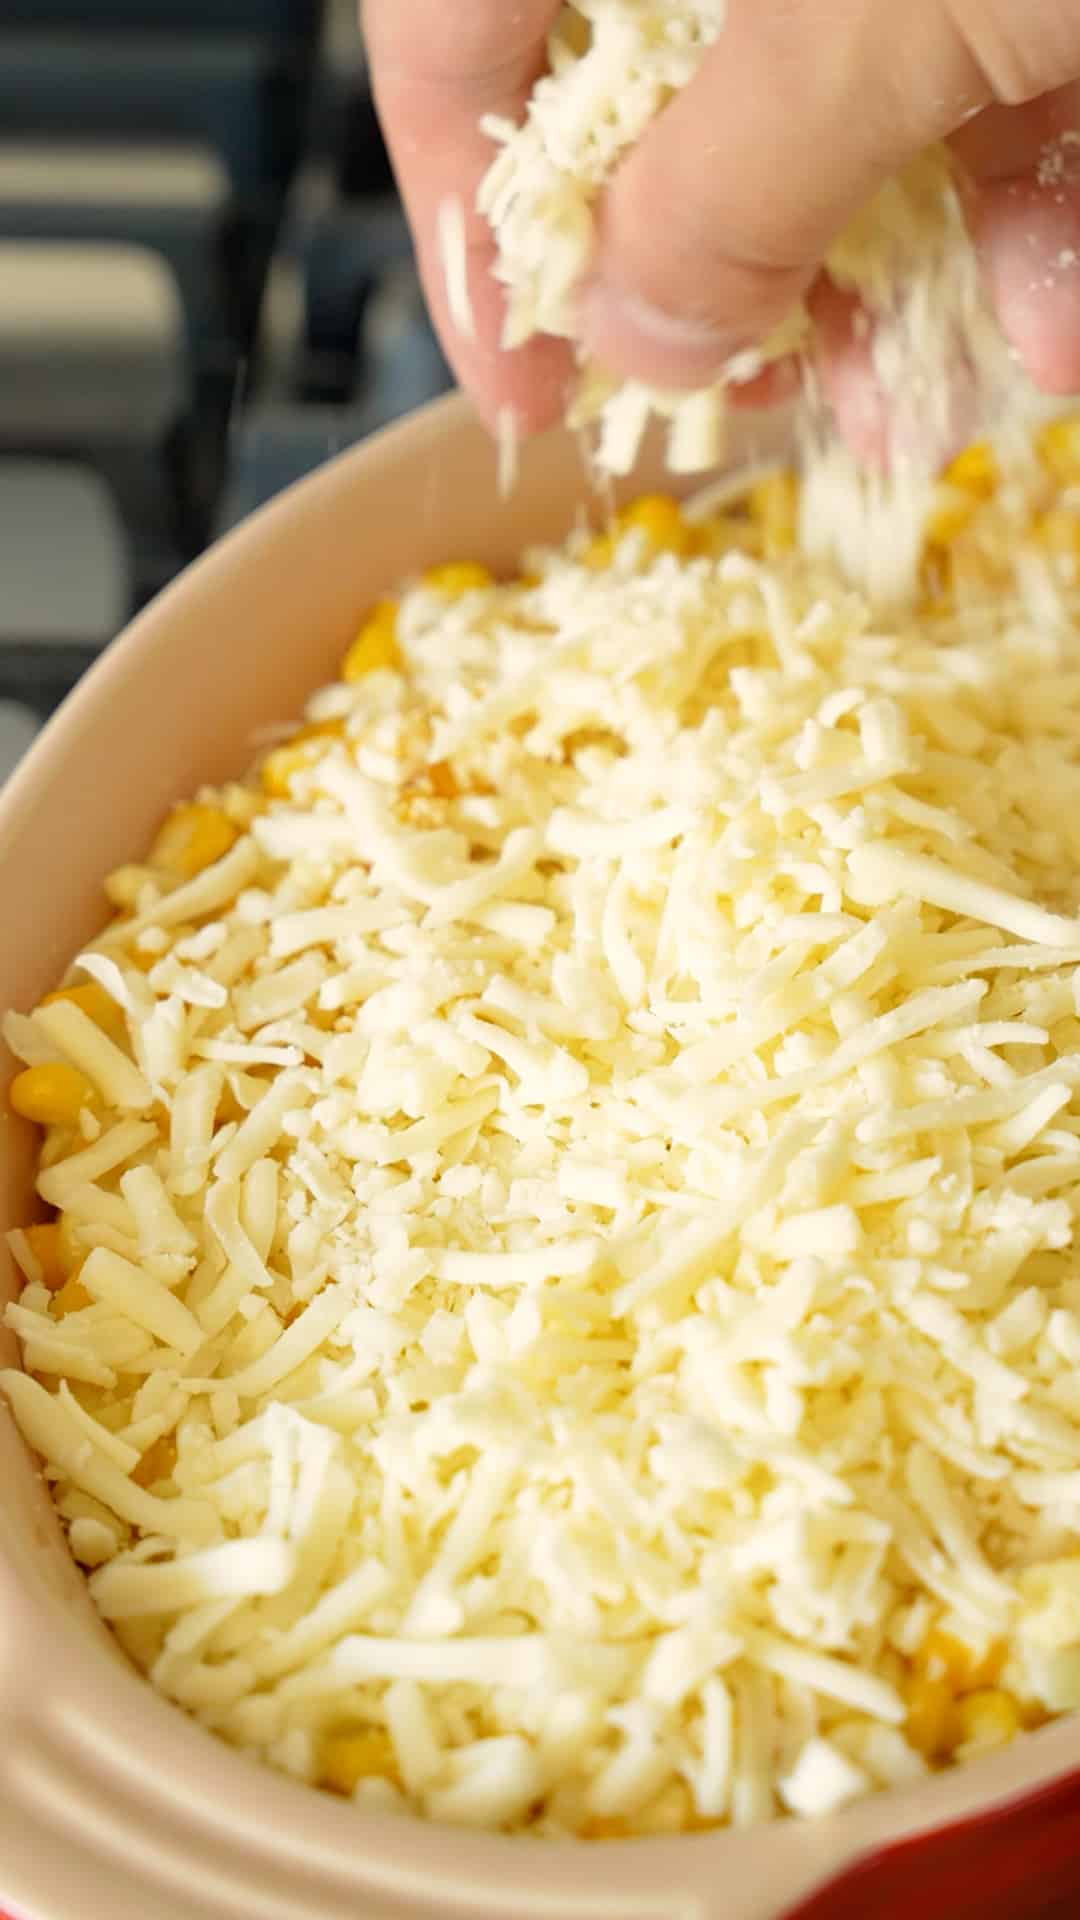 Topping the Korean corn cheese with mozzarella cheese.